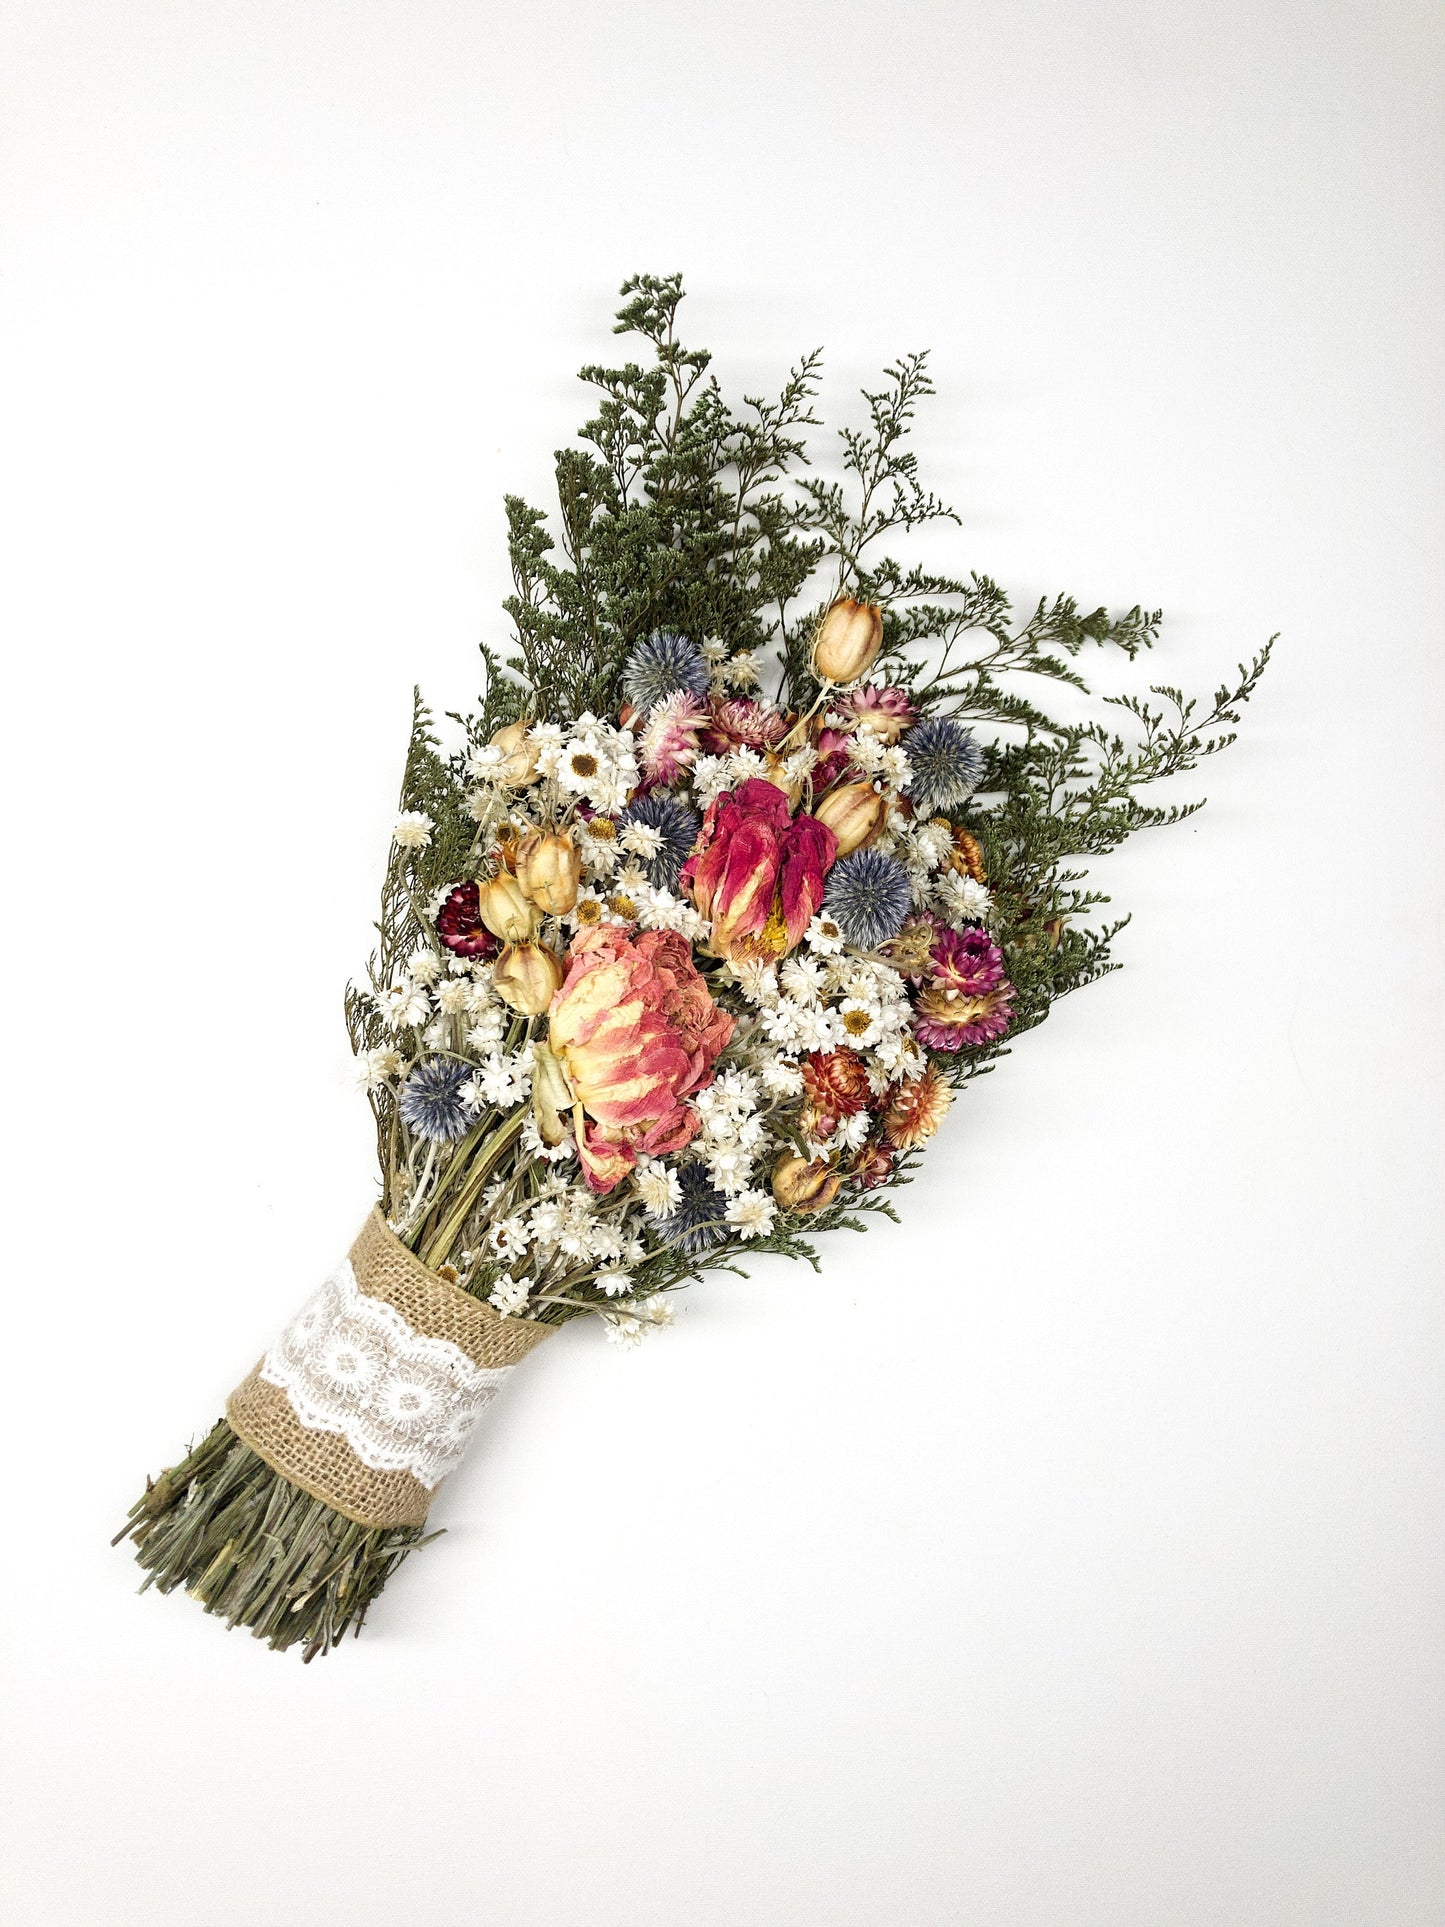 Wedding Bouquet, Dried Flowers, Preserved Floral, Bridal, Peonies, Strawflowers, Globe Thistles, Ammobium, Caspia, Nigella